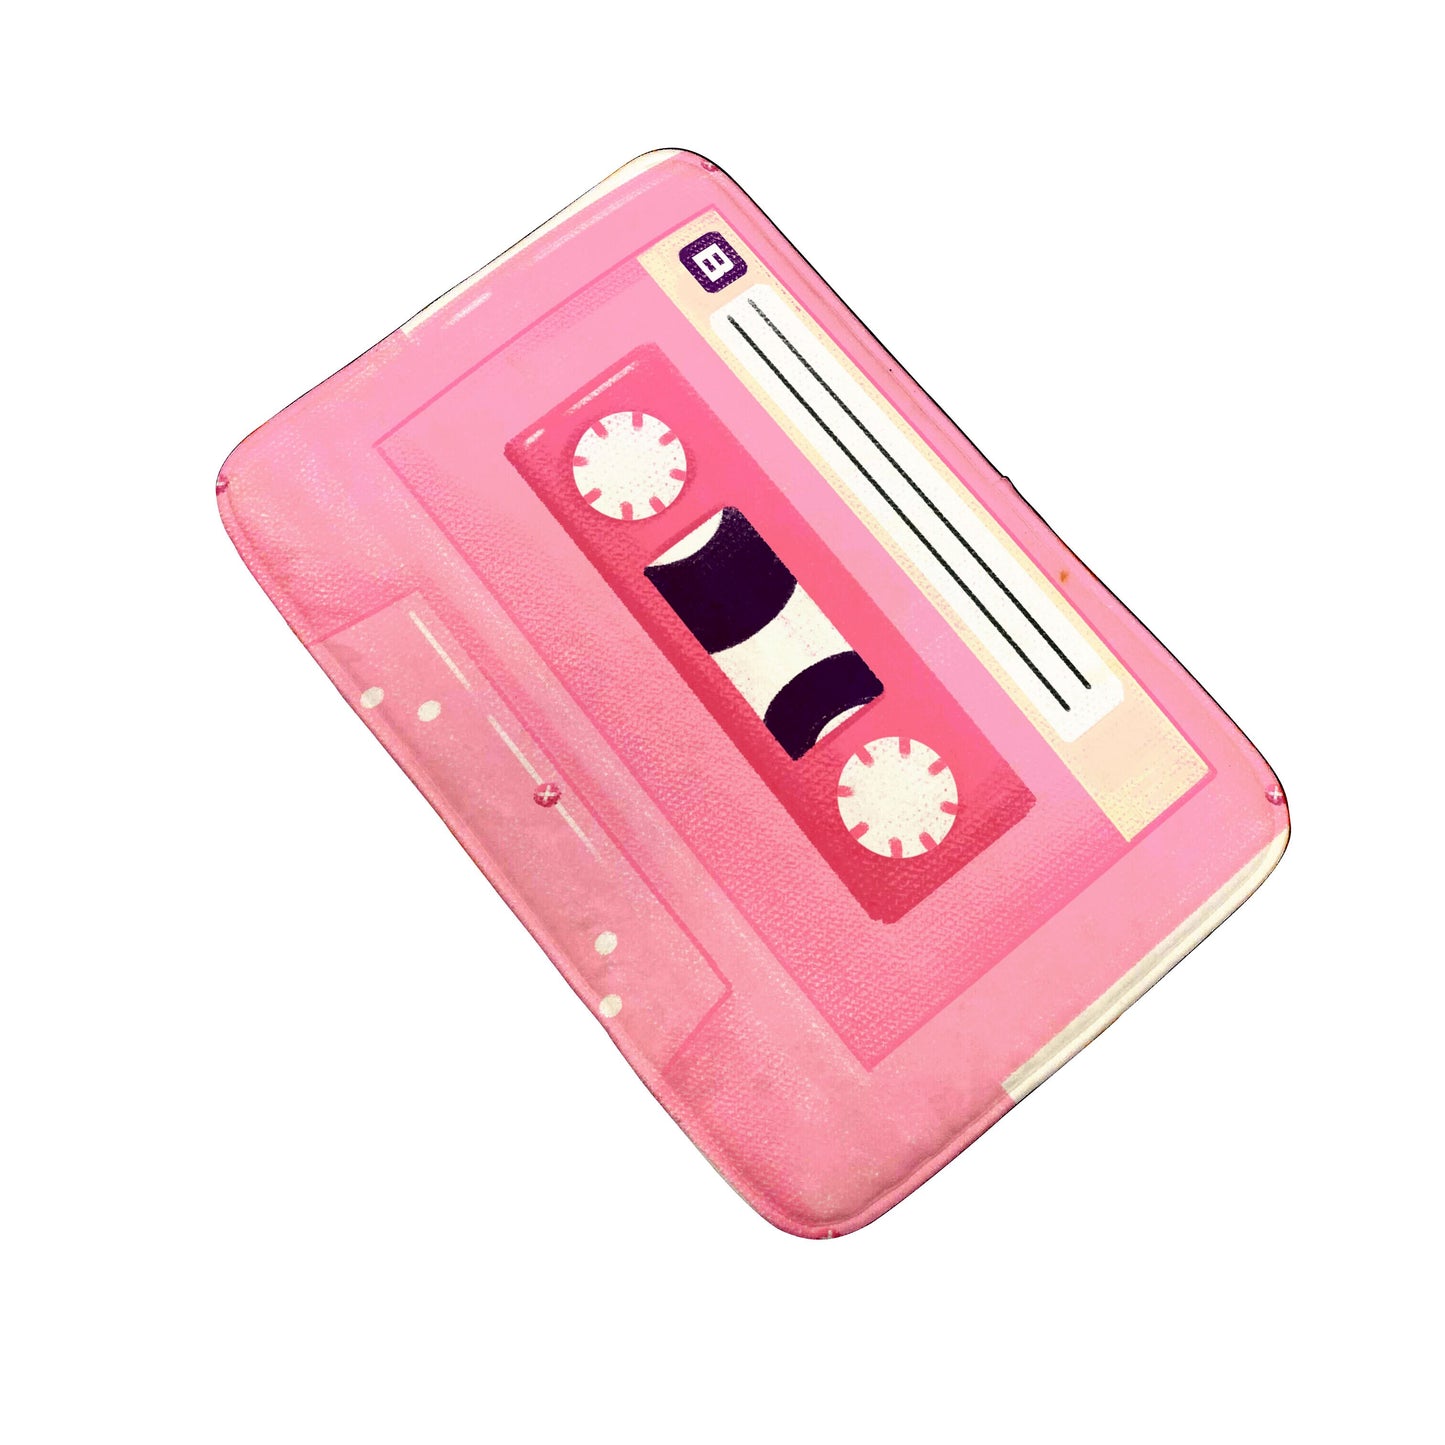 TEEK - A Bunch of Cassette Tape Rugs HOME DECOR theteekdotcom 15 15.75x23.62in 20-25 days